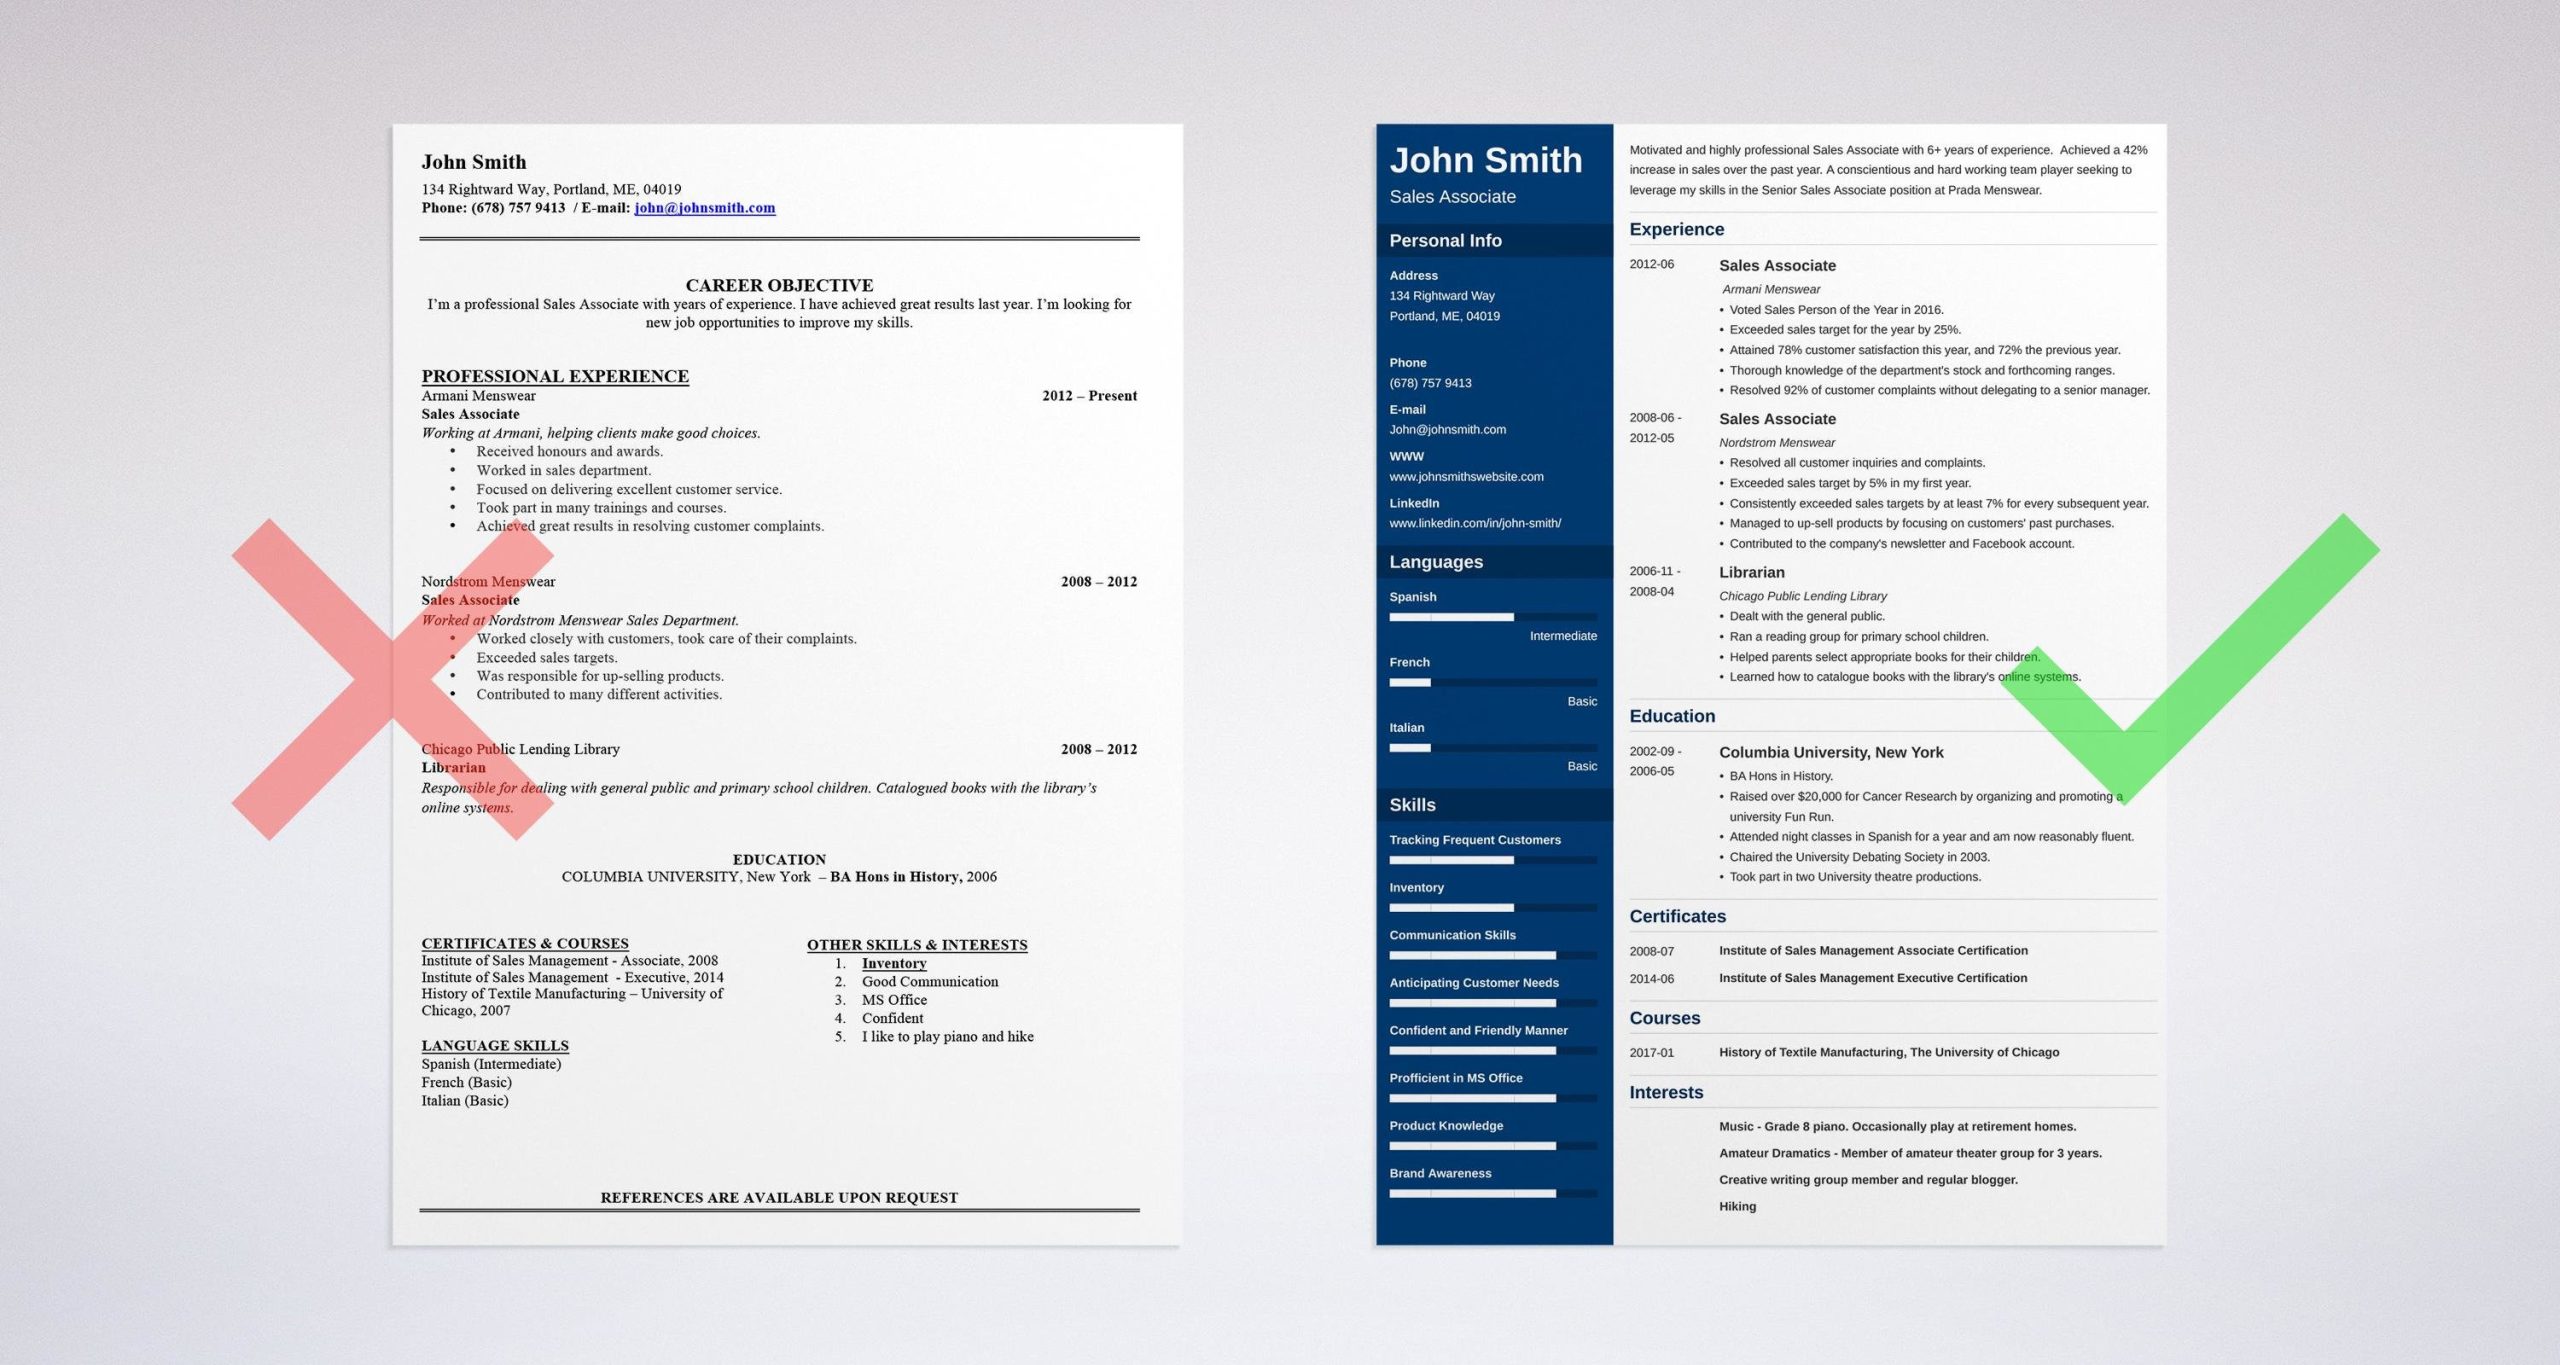 Sample Resume for Shoe Sales associate Sales associate Resume [example   Job Description]